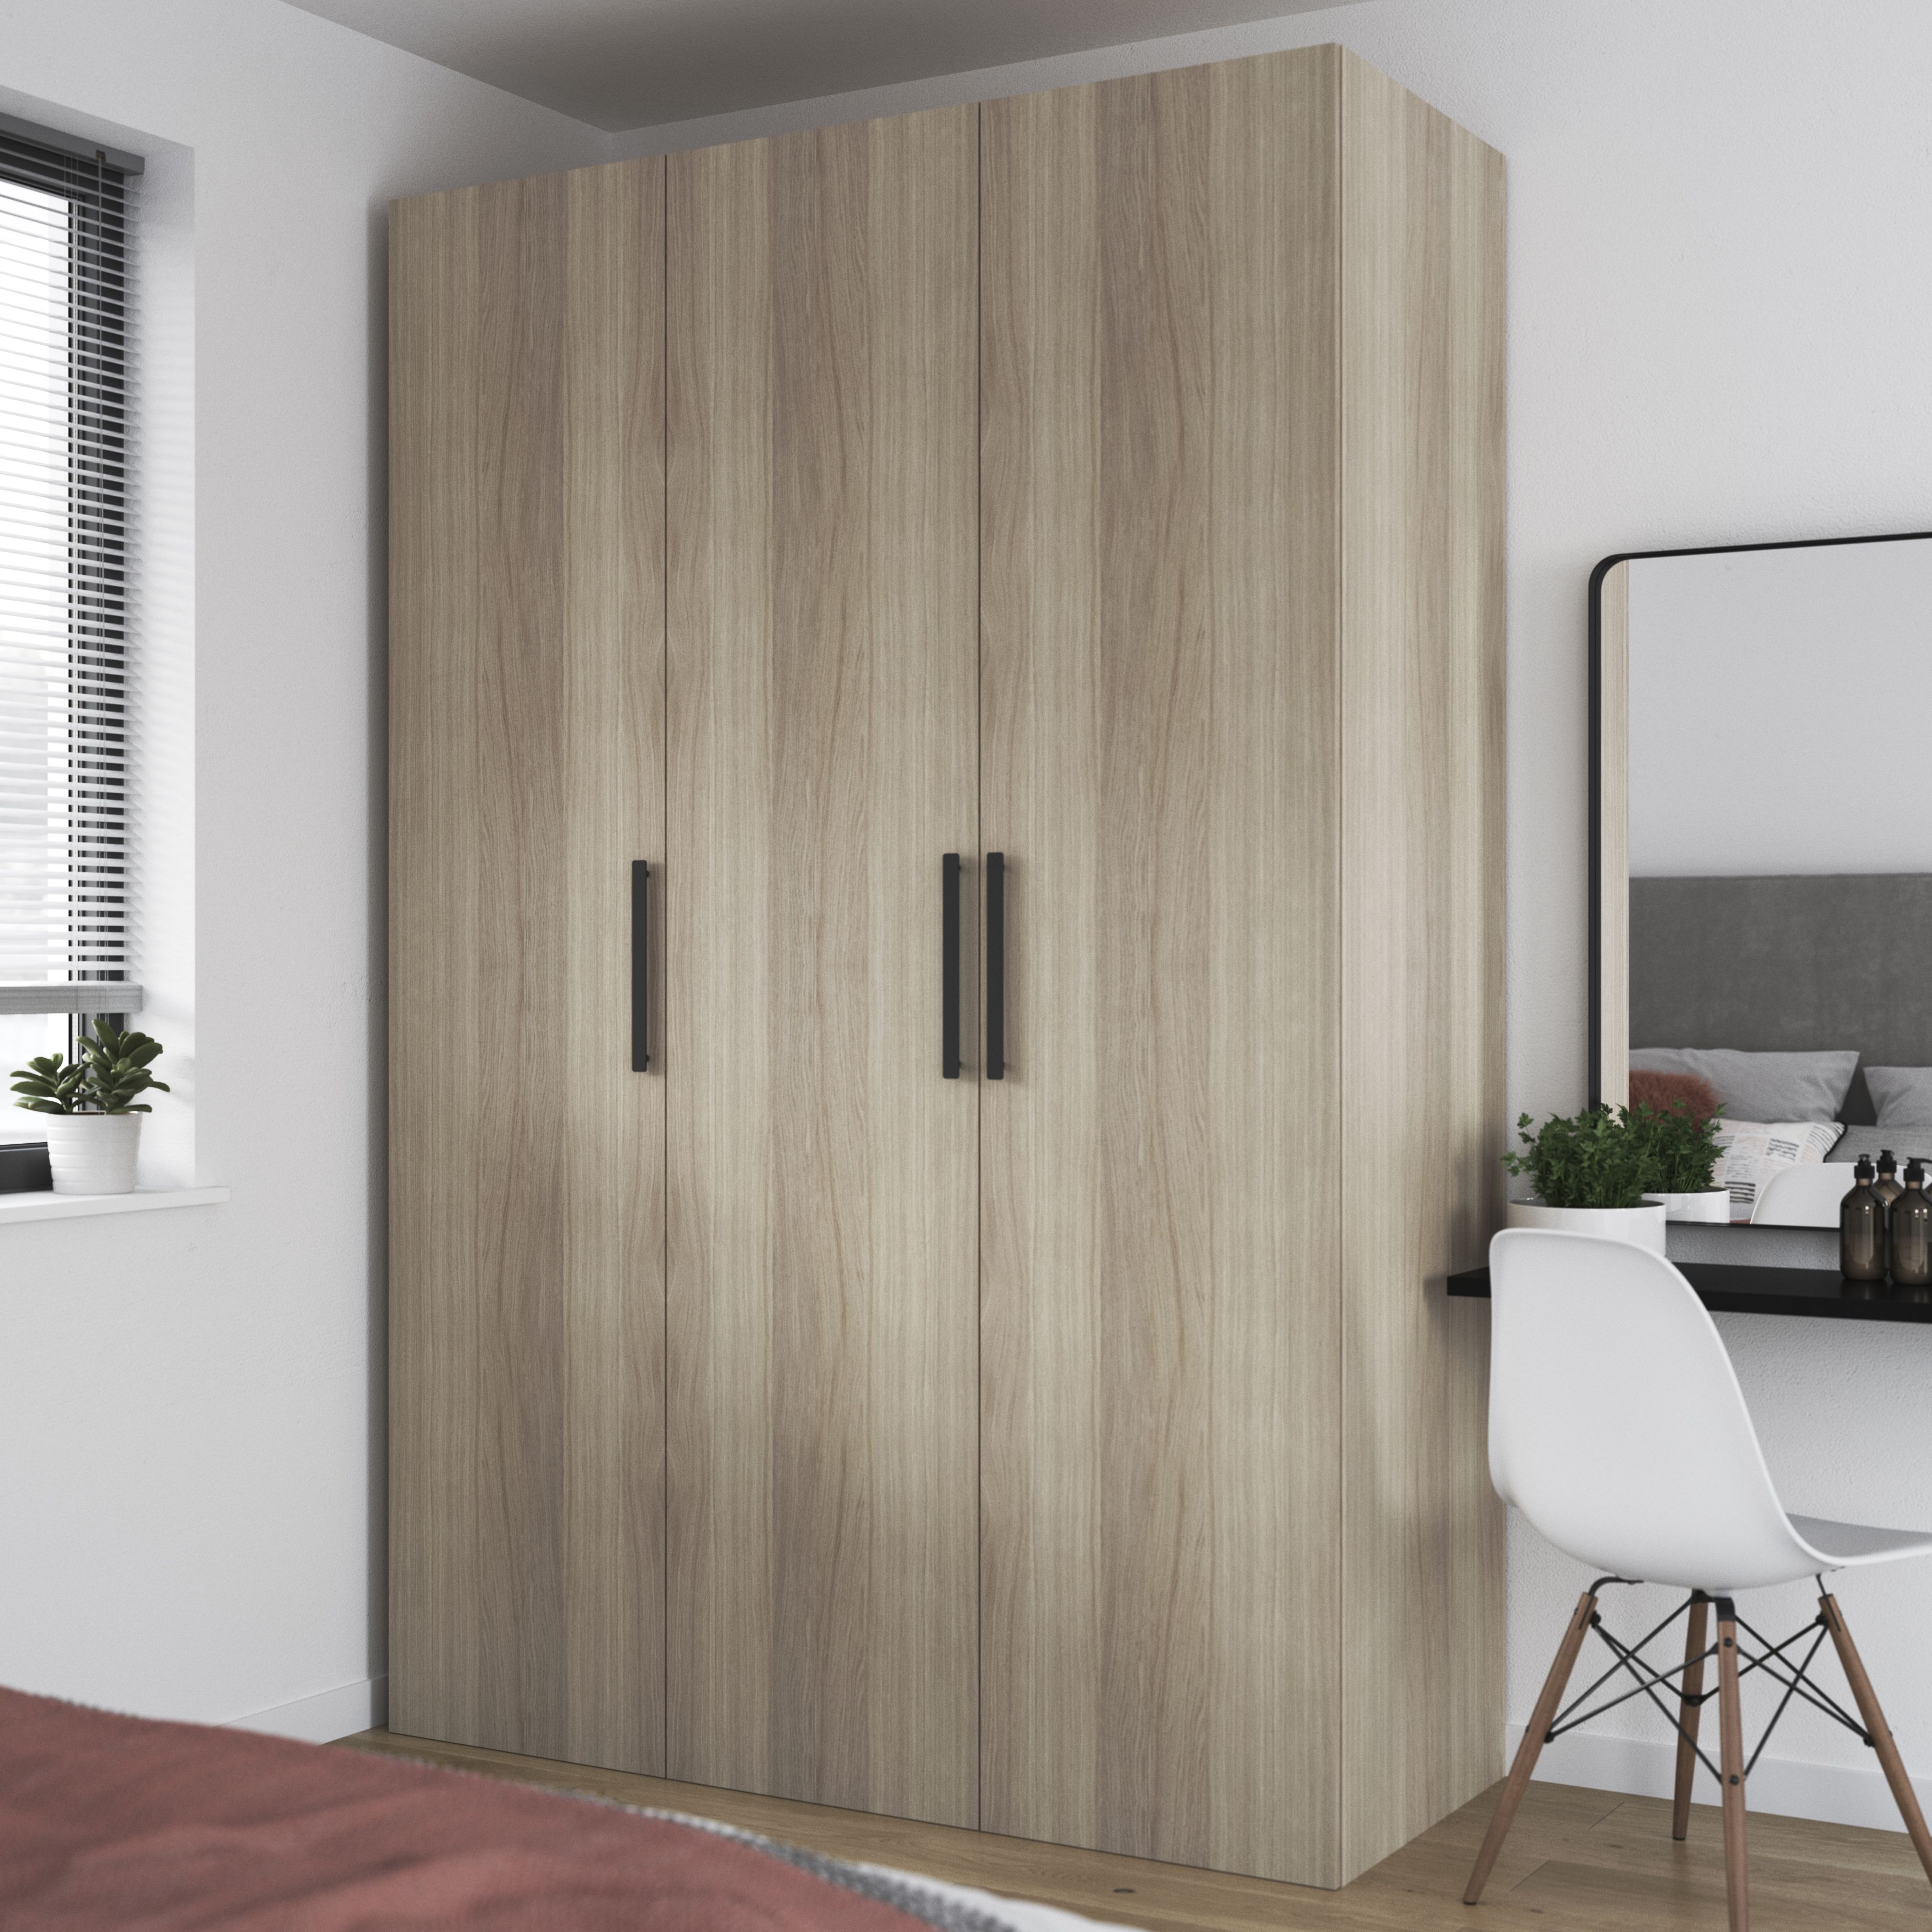 GoodHome Atomia Oak effect Modular furniture cabinet, (H)2250mm (W)500mm (D)580mm